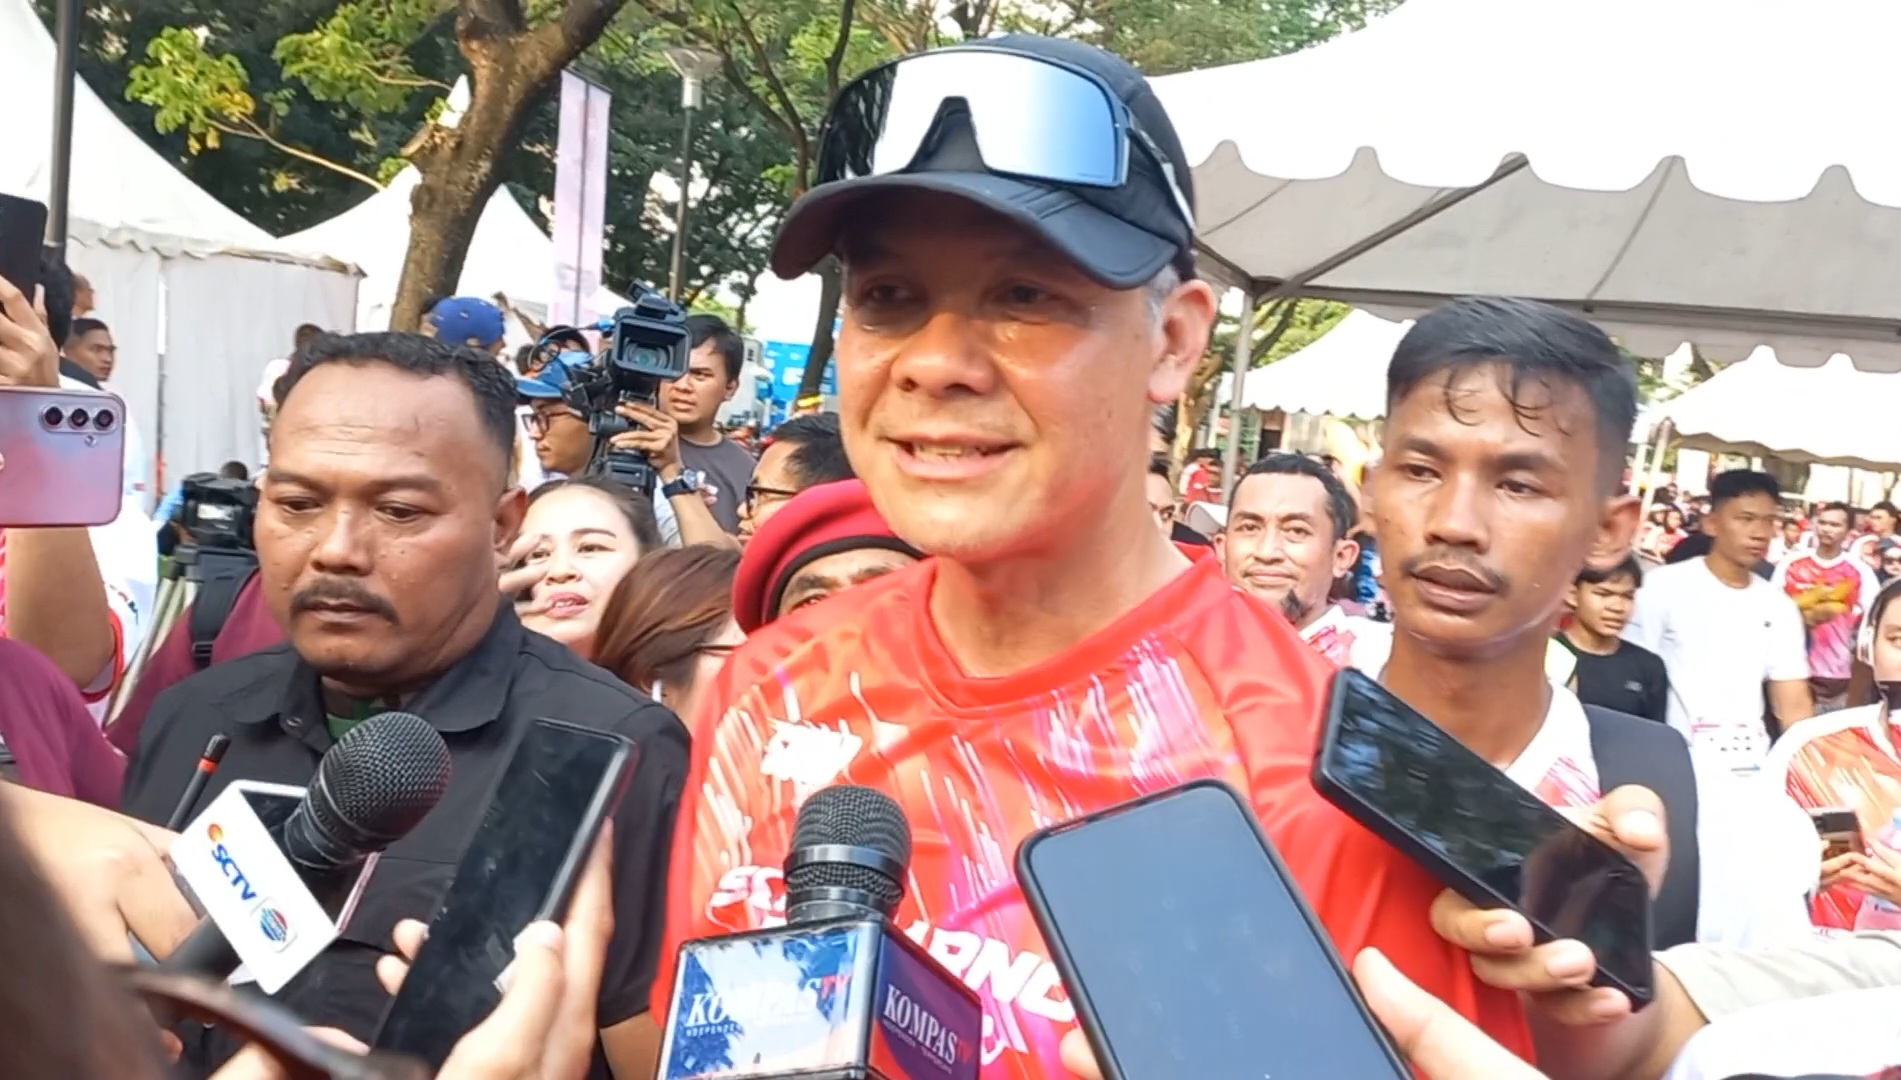 Ganjar Pranowo: Soekarno Run Bukan Sekedar Olahraga, Tapi Soal Perjuangan Bangsa